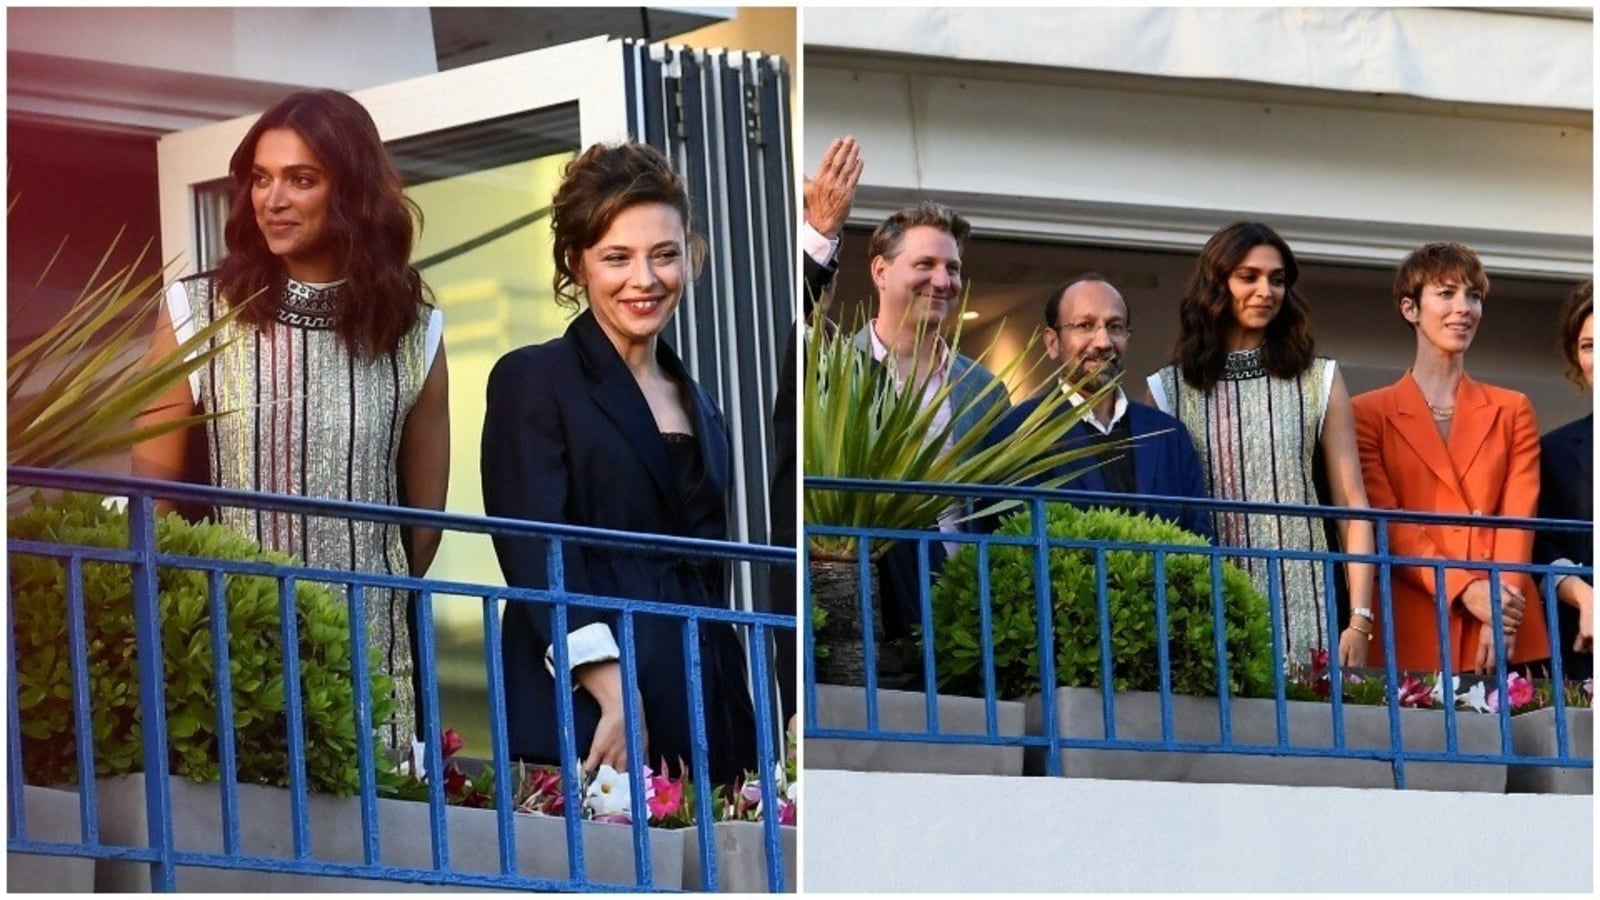 Deepika Padukone attends Cannes Film Festival jury dinner; poses with Asghar Farhadi, Rebecca Hall. See pics